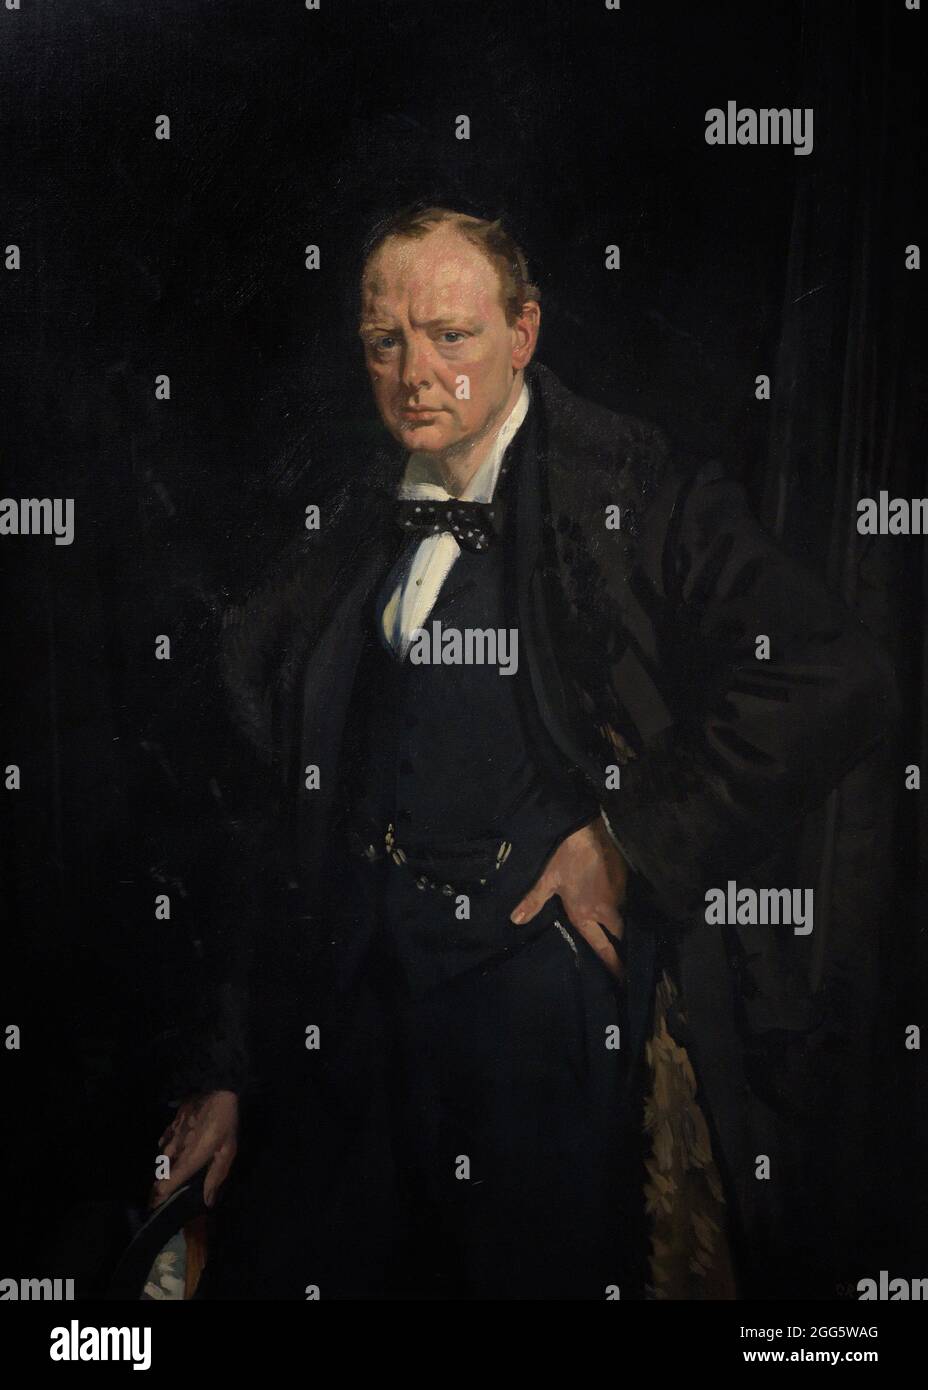 Winston Churchill (1874-1965). British politician. Prime Minister of the United Kingdom (1940–1945, 1951–1955). Portrait by William Orpen (1878-1931). Oil on canvas (148 x 102,5 cm), 1916. National Portrait Gallery. London, England, United Kingdom. Stock Photo